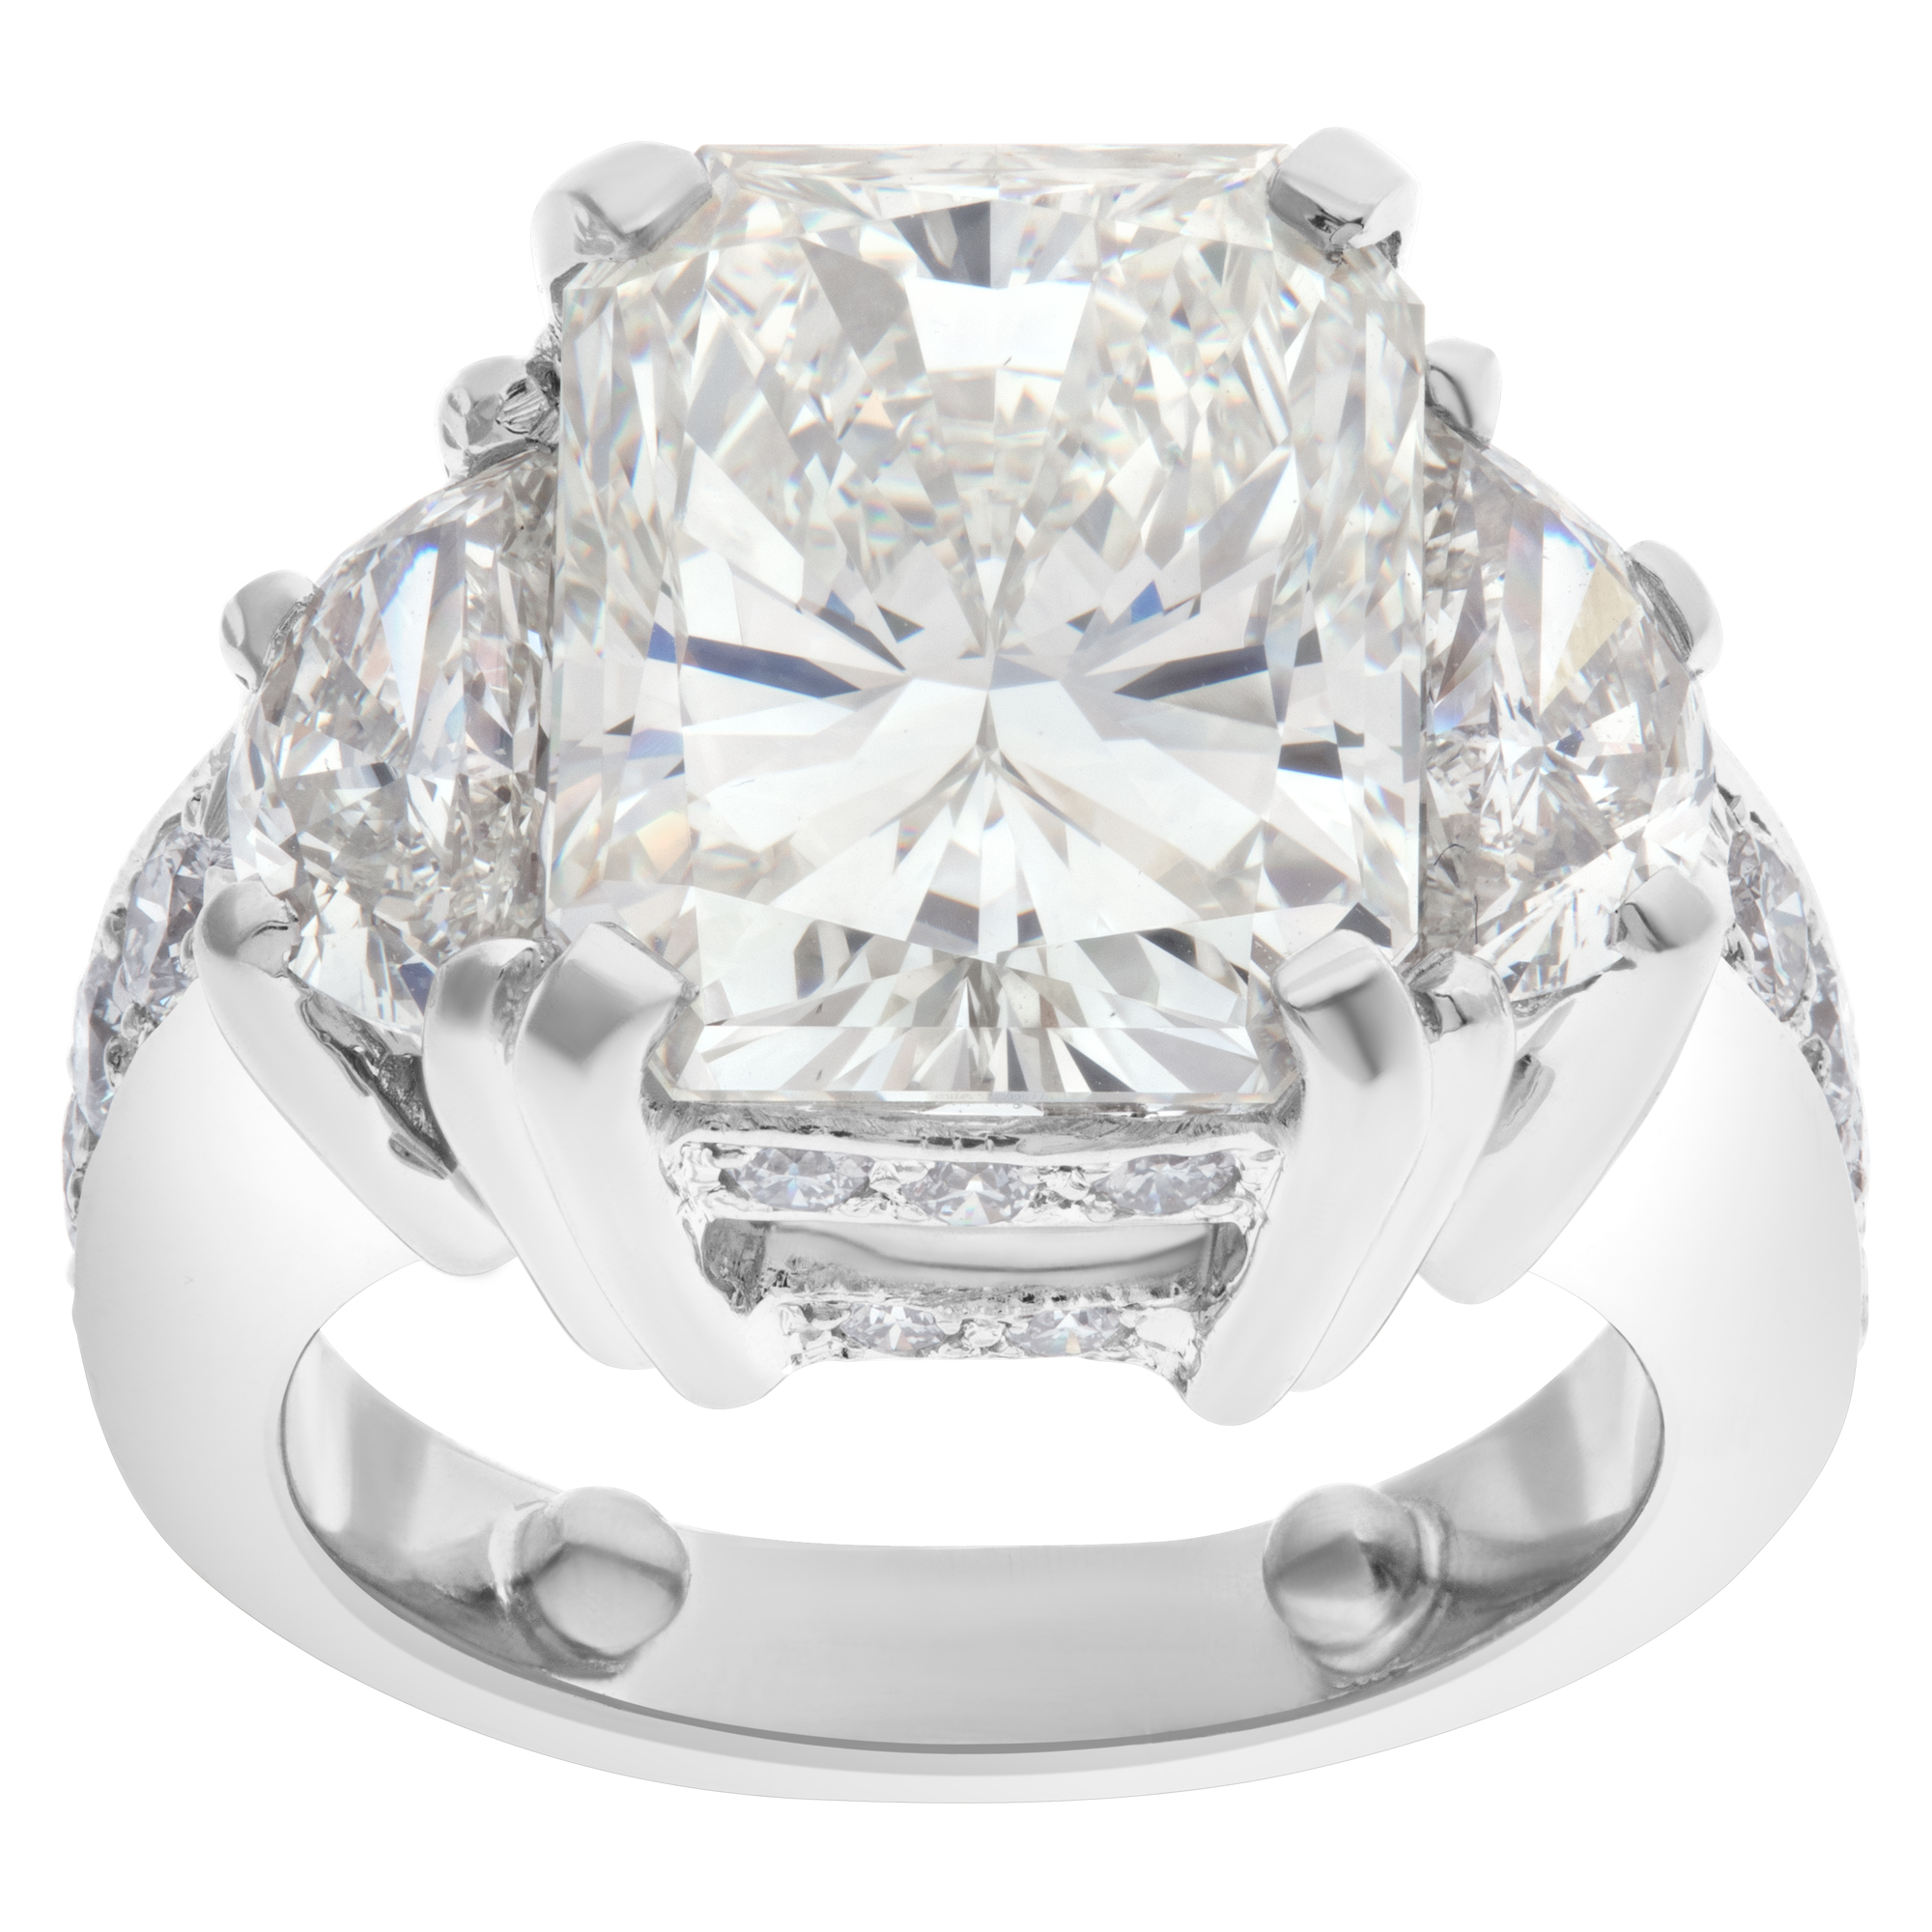 GIA certified cut-cornered rectangular modified brilliant cut diamond 7.21 carat (K color, VS1 clarity) ring